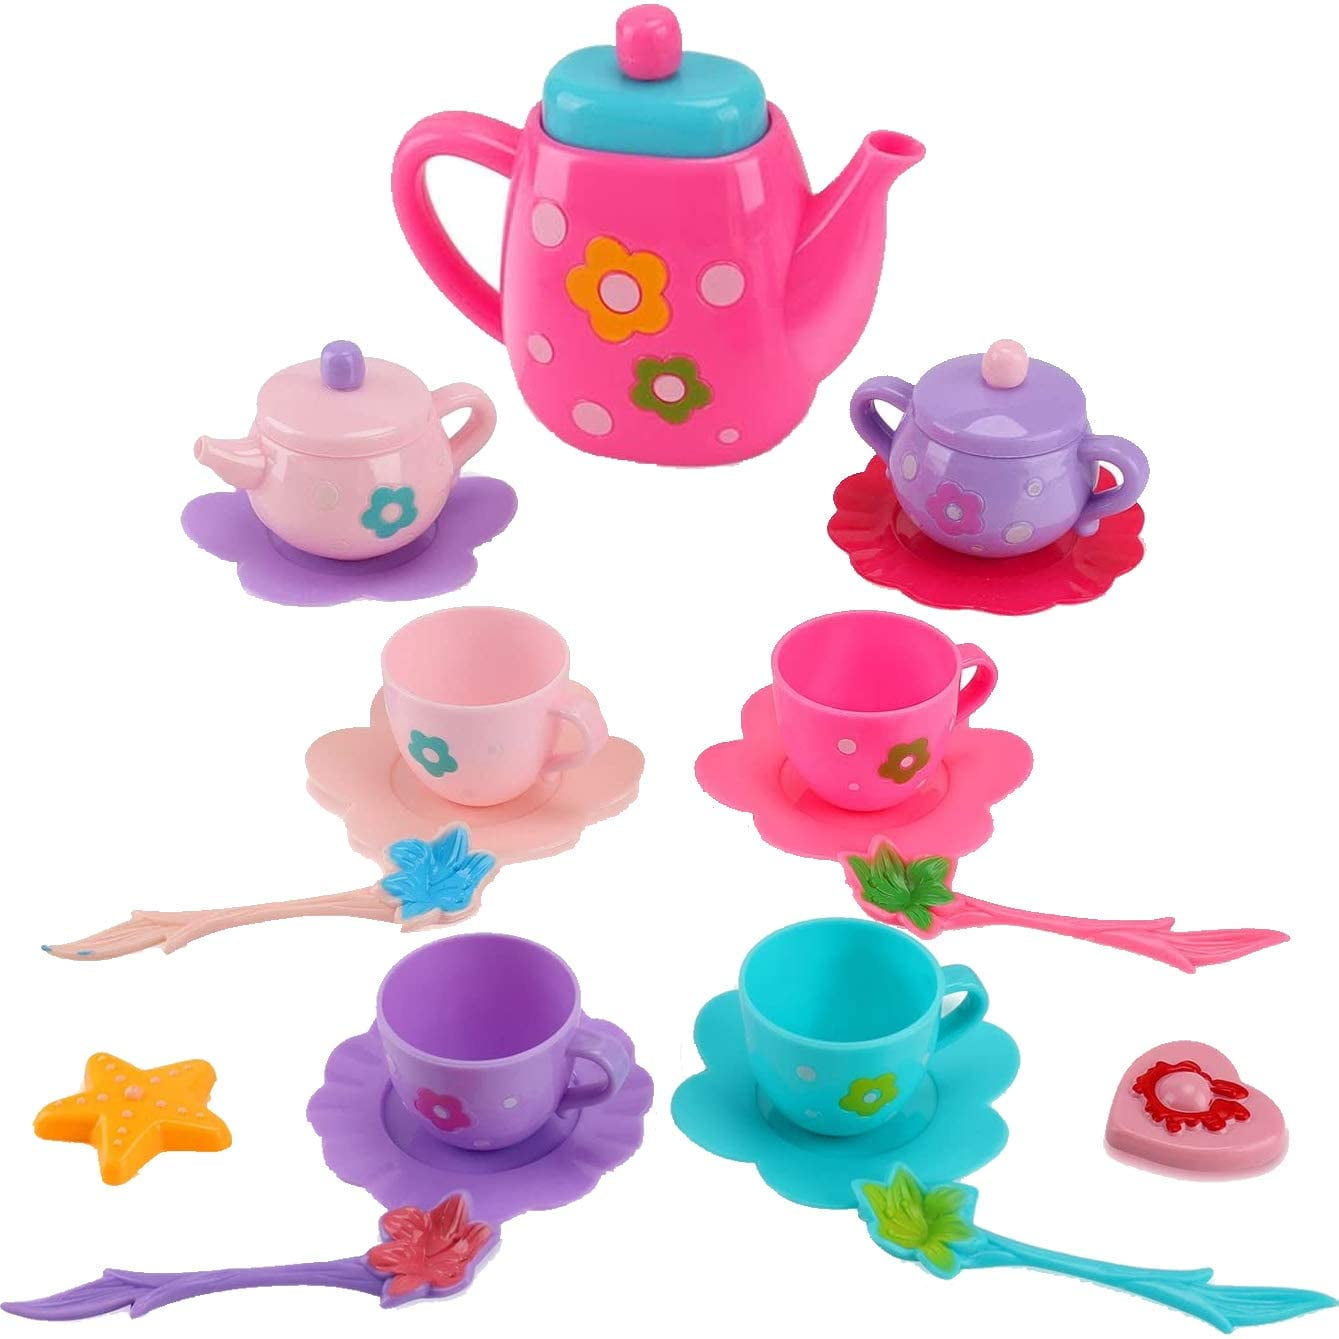 KiddyPlay Tea-set Cutlery Pans Childrens/Kids Pretend Play Kitchen Cooking Toy 